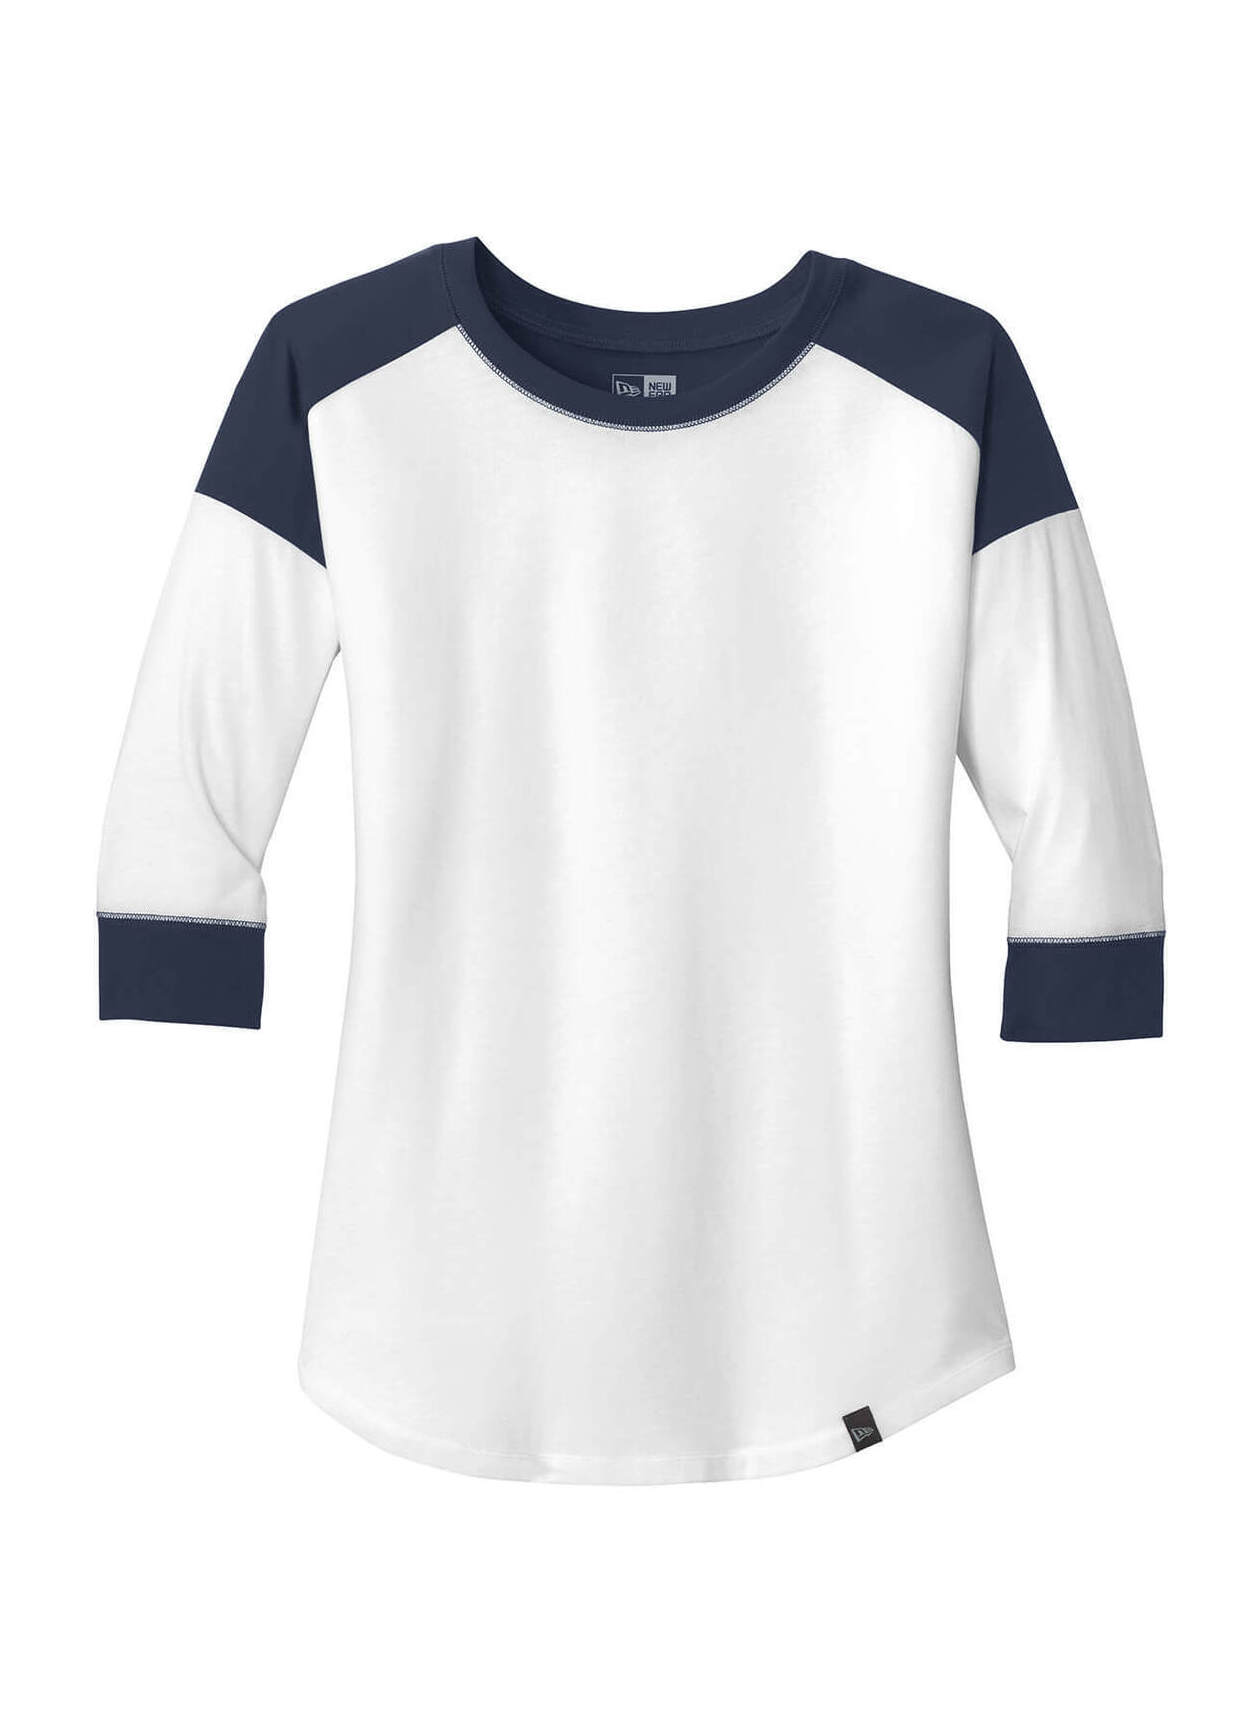 New Era Women's True Navy / White Heritage Blend 3/4-Sleeve Baseball Raglan T-Shirt